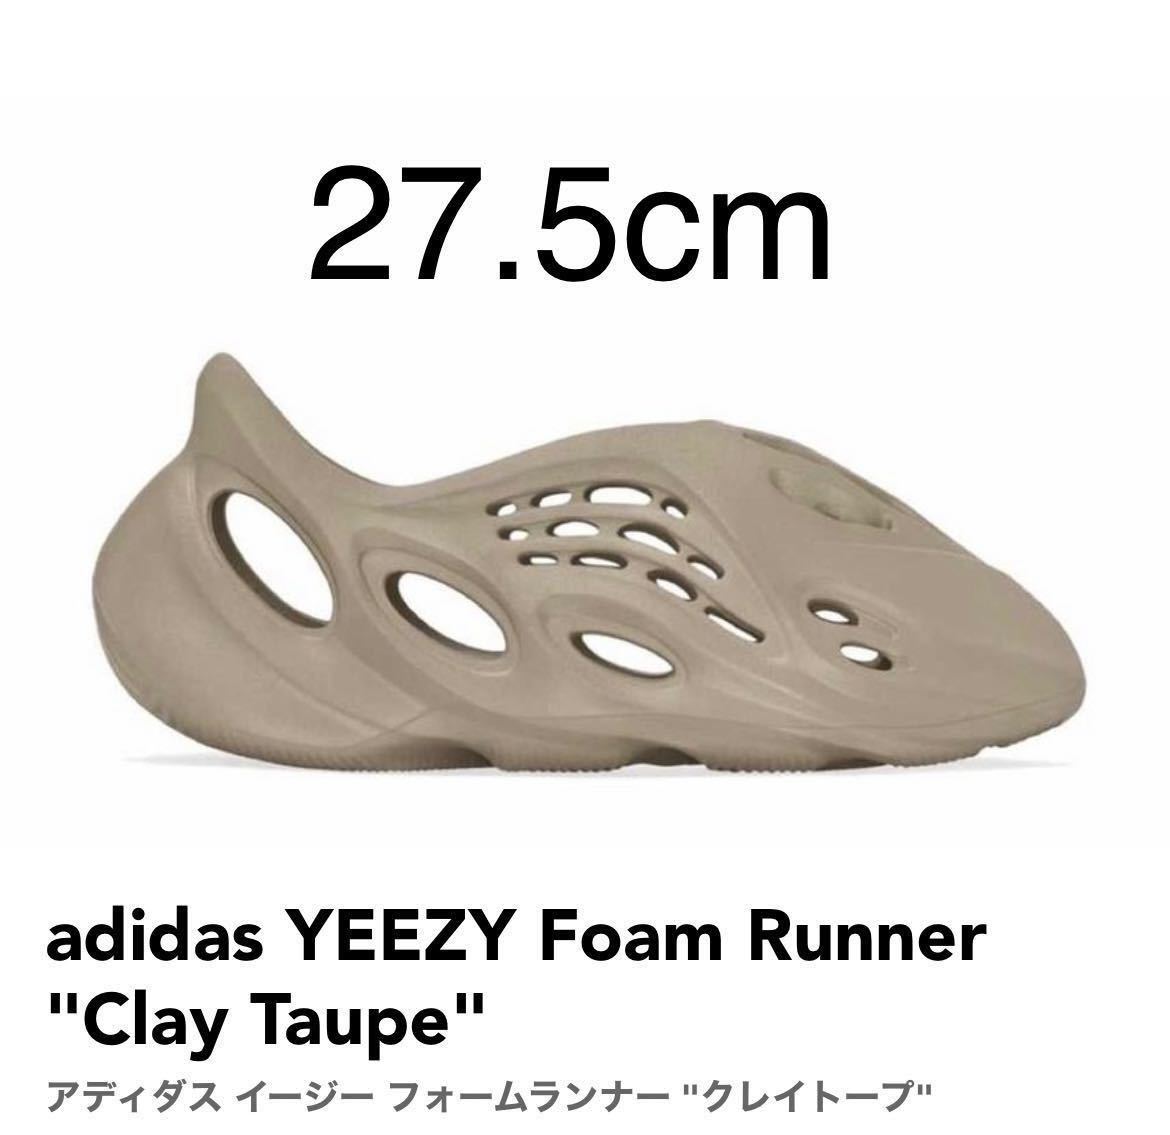 adidas Yeezy Foam Runner “Clay Taupe” rnr イージー フォームランナー クレイ トープ GV6842 27.5cm 新品 未使用 即納 当選品